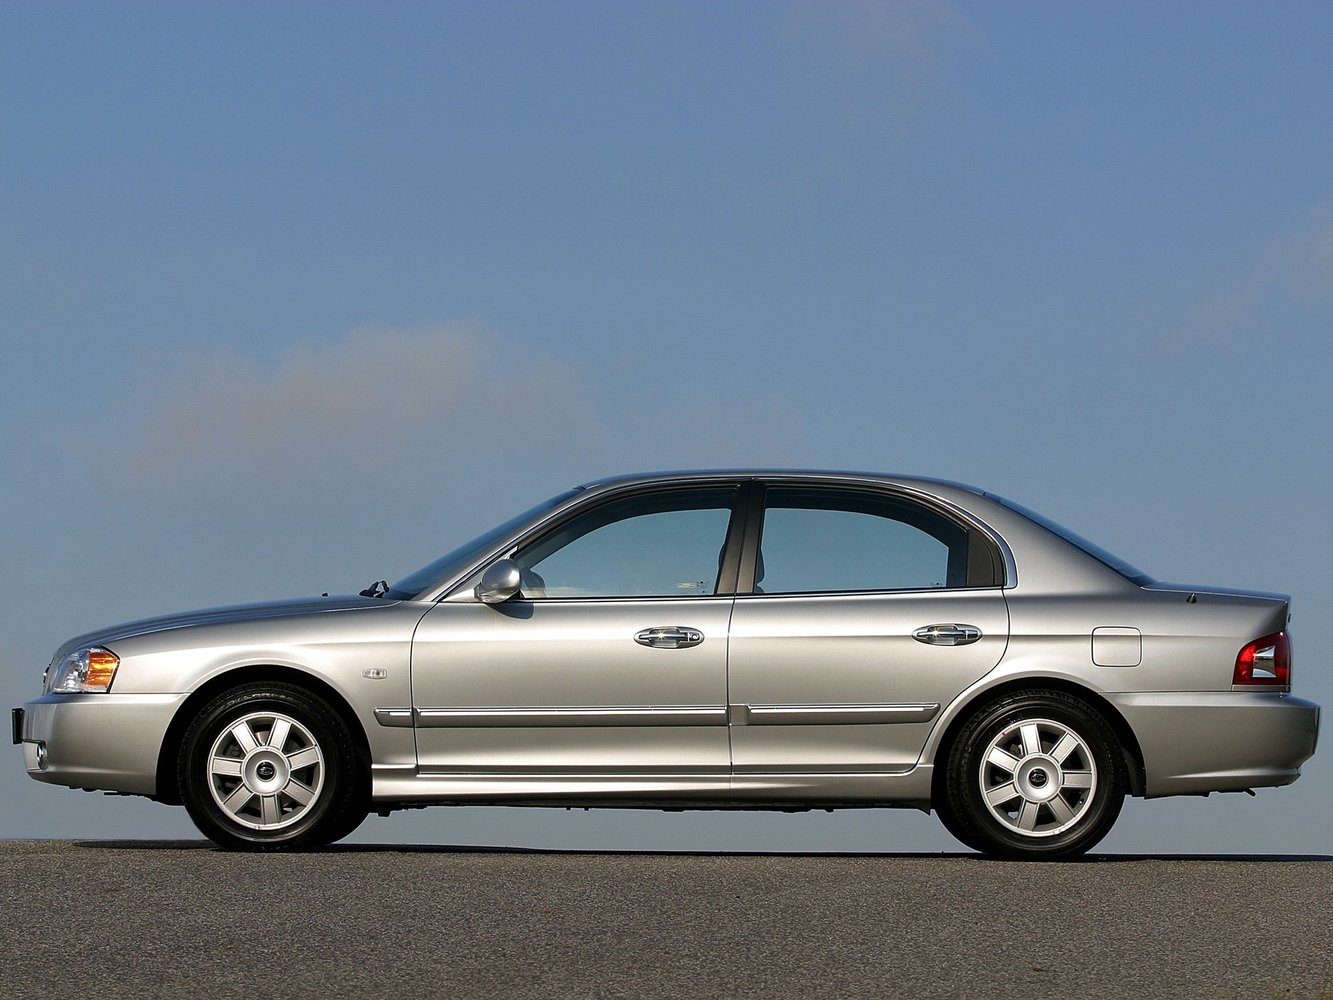 седан Kia Magentis 2003 - 2006г выпуска модификация 2.0 AT (136 л.с.)